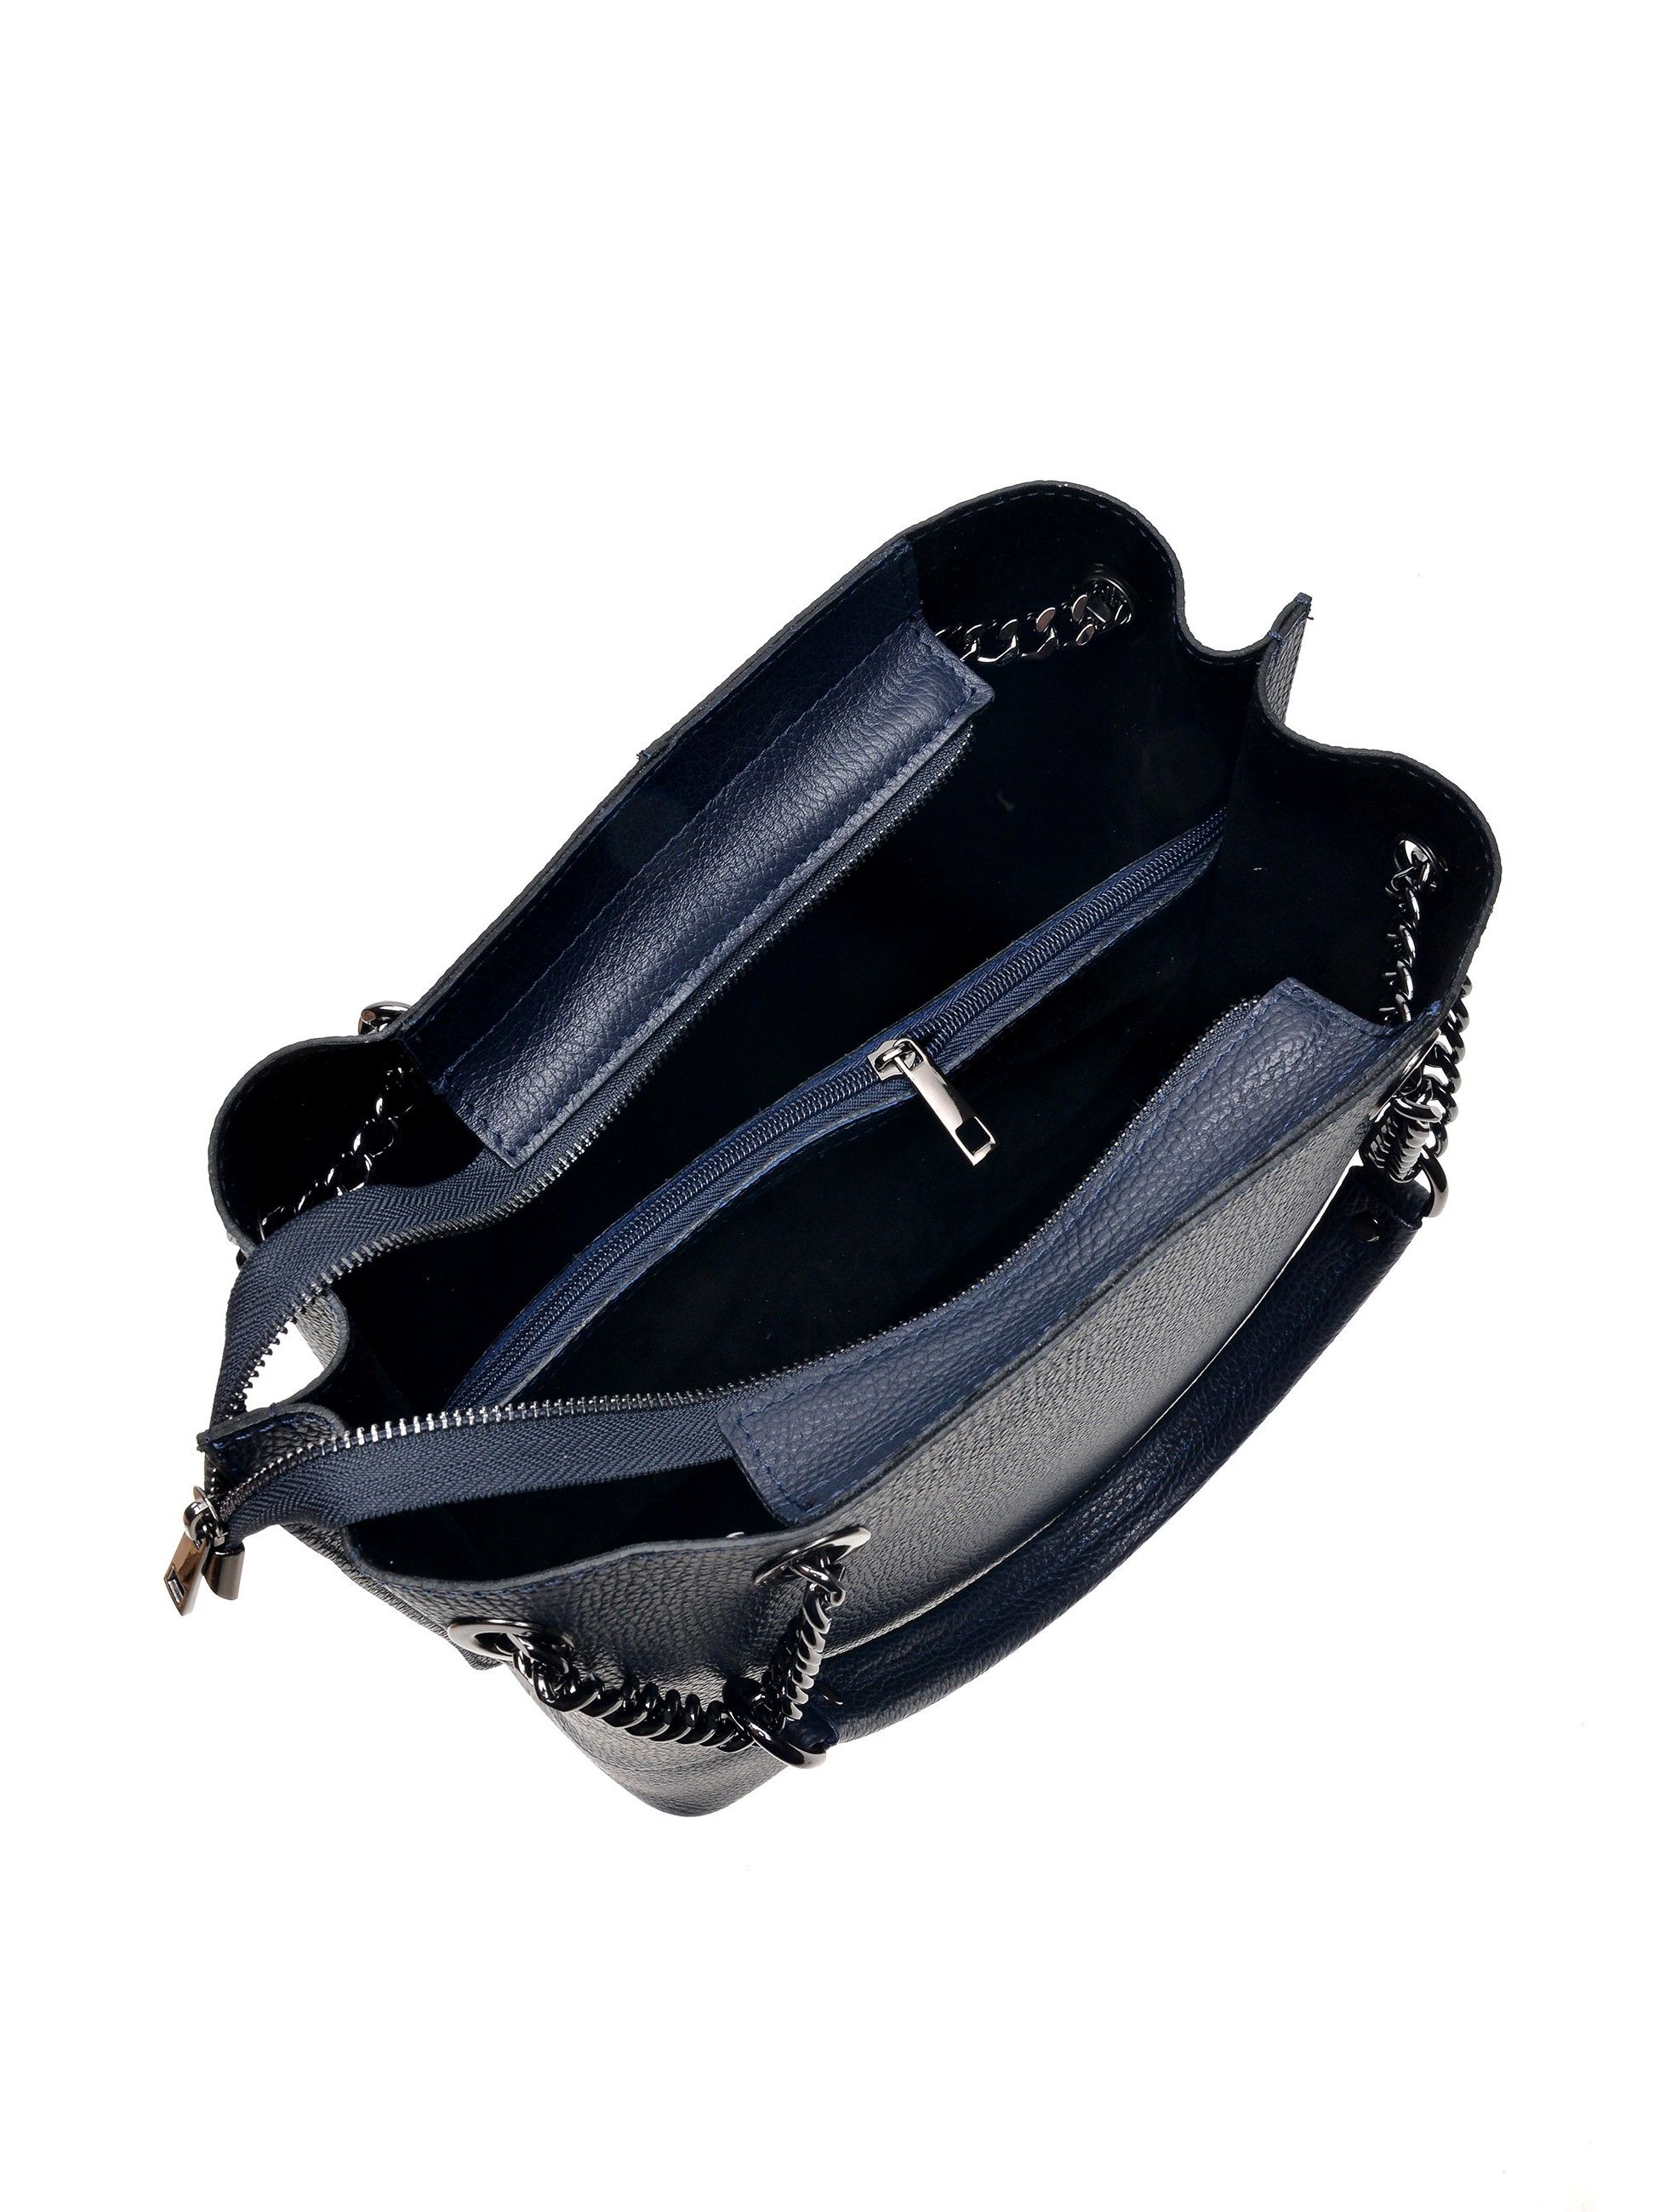 Shoulder Bag
100% cow leather
Top zip closure
Double compartment bag
Inner zipped compartment
Studded feet
Dimensions (L):33x34x14 cm
Handle: 54 cm
Shoulder strap: /